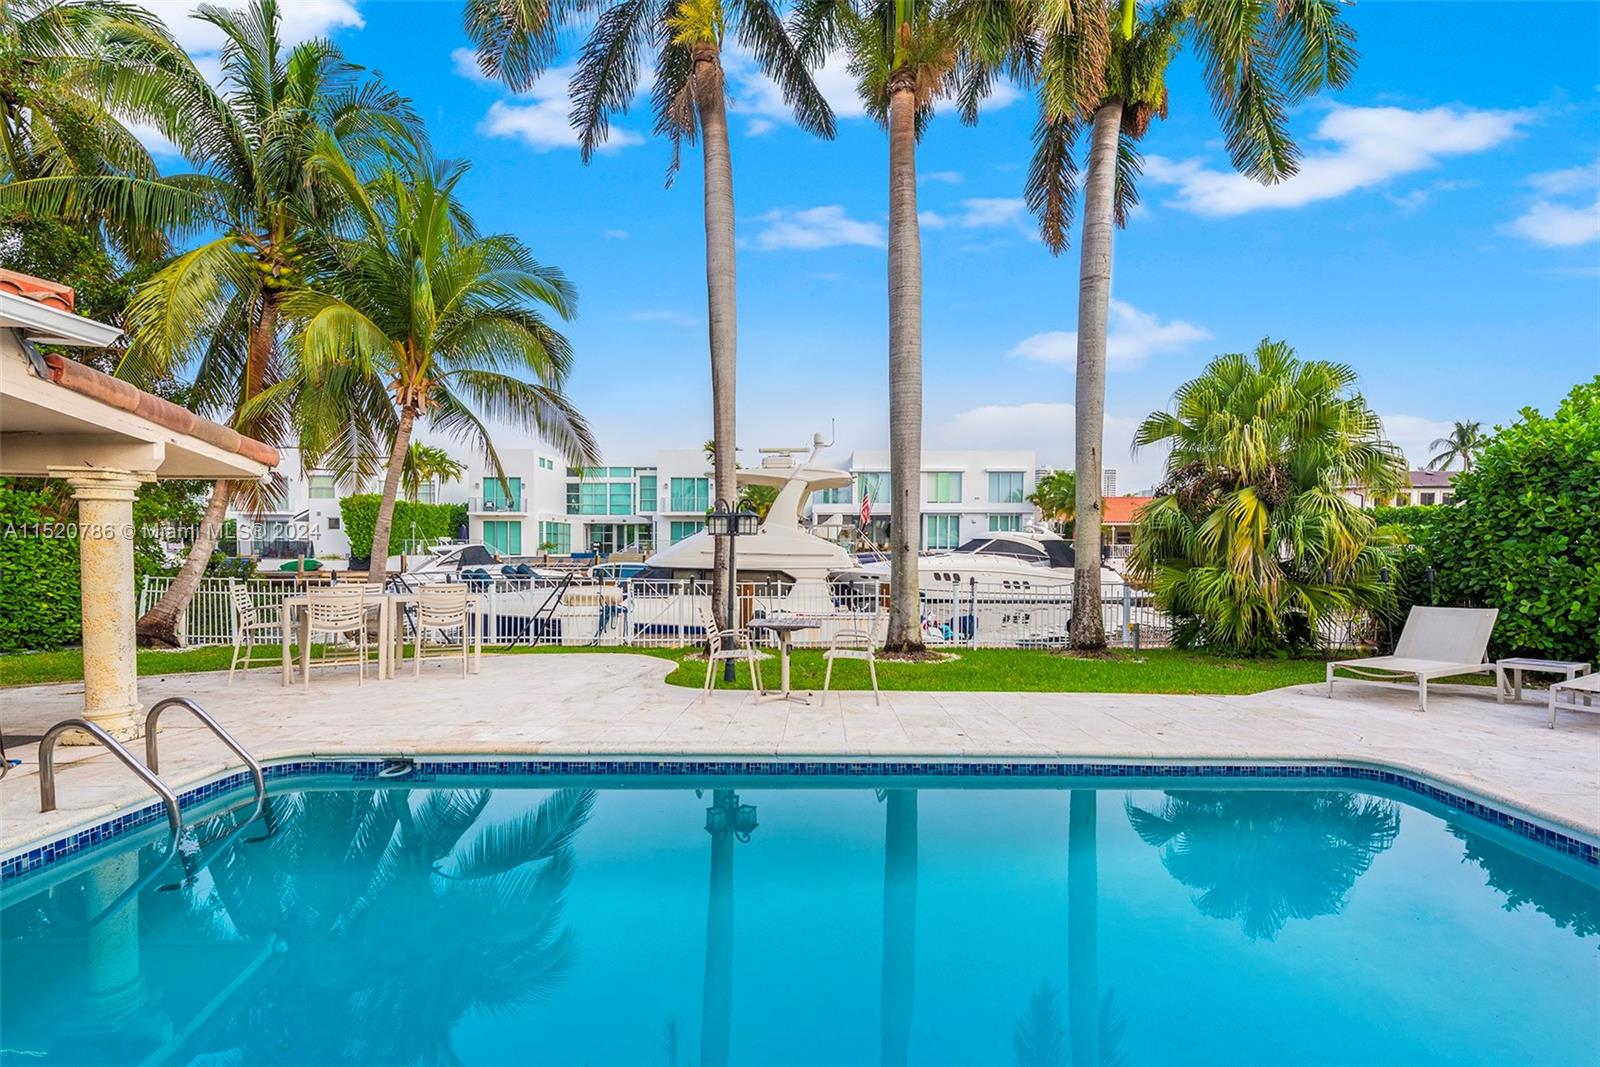 Property for Sale at 3241 Ne 165th St, North Miami Beach, Miami-Dade County, Florida - Bedrooms: 4 
Bathrooms: 4  - $3,150,000